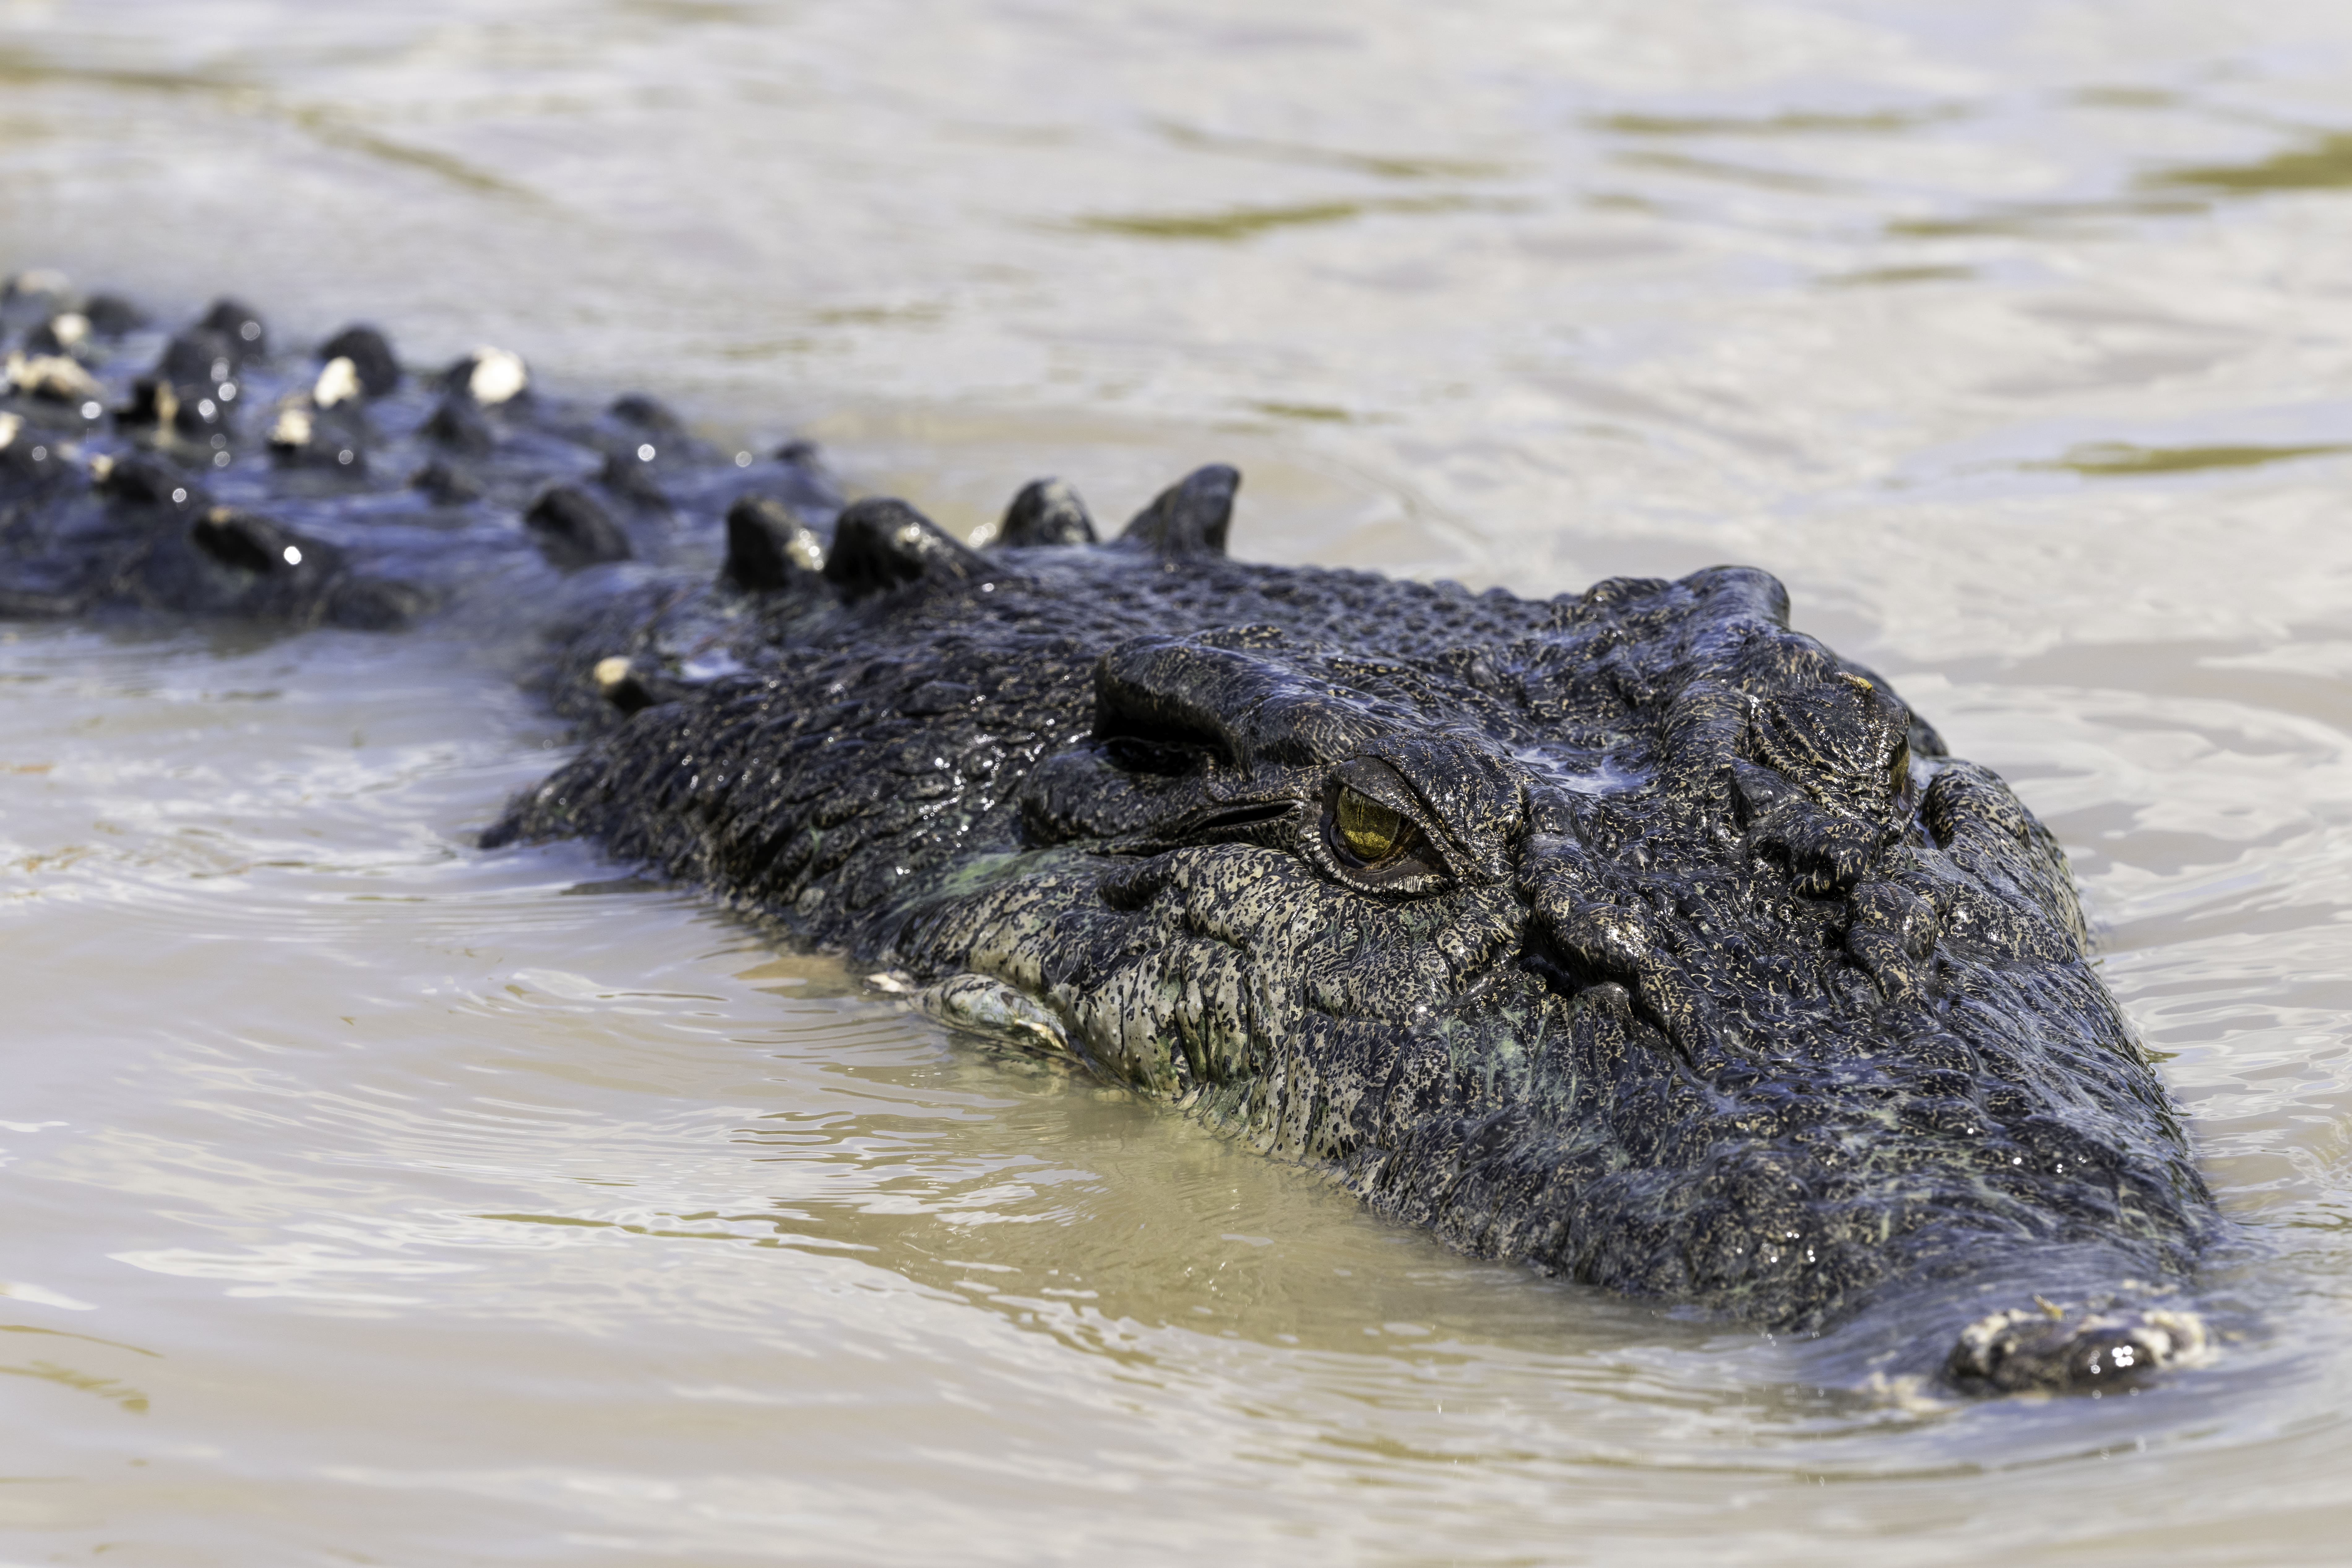 1-Day Jumping Crocodile Cruise Tour from Darwin